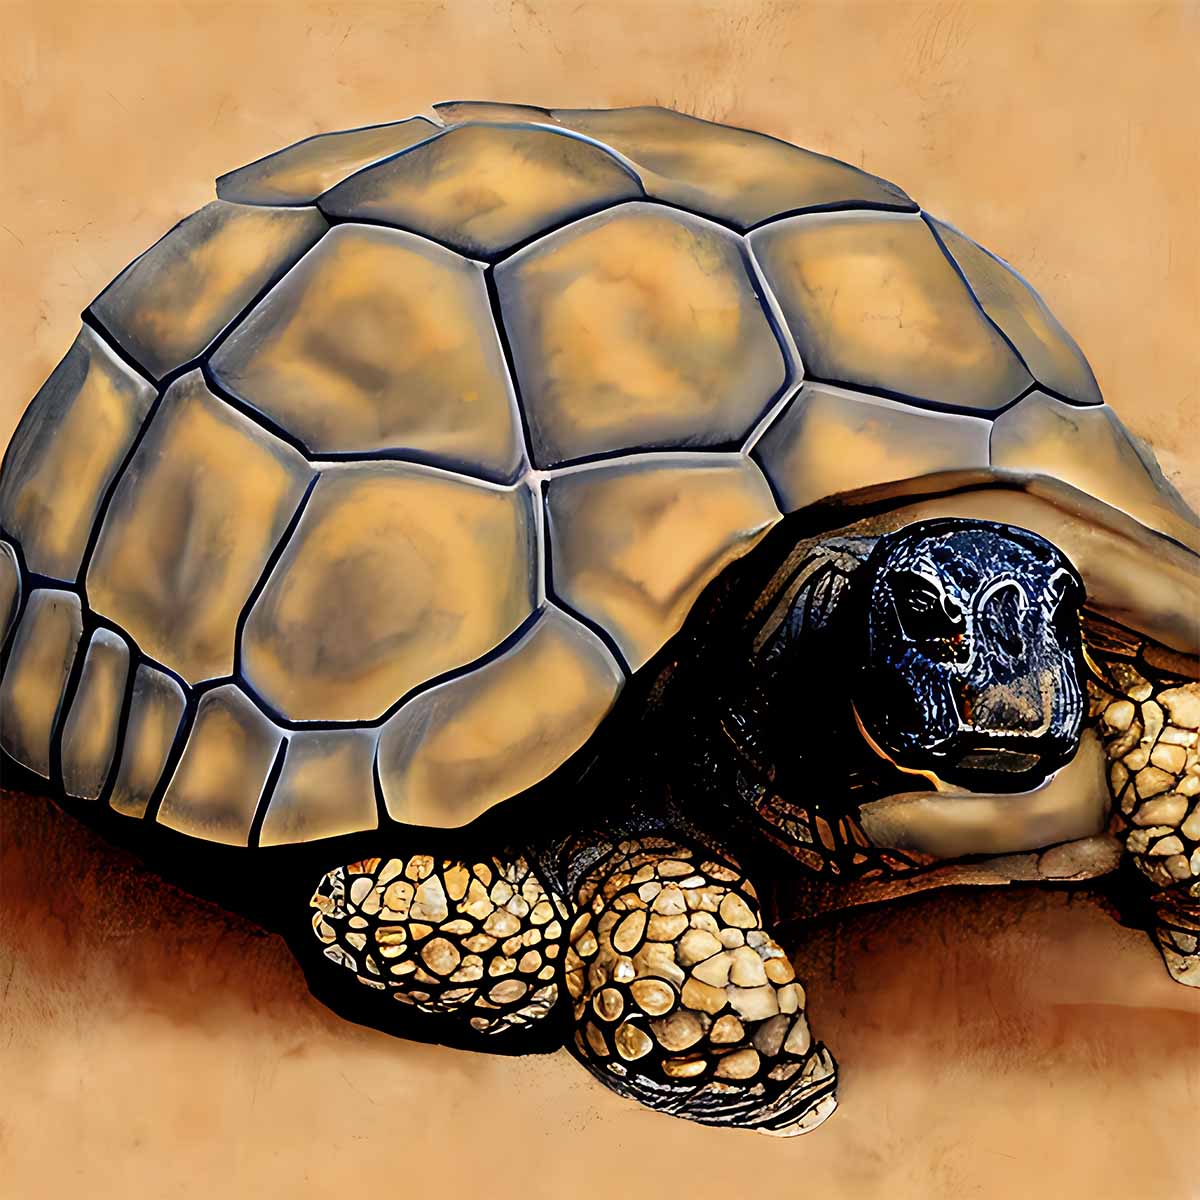 Turtle-CP112.jpg